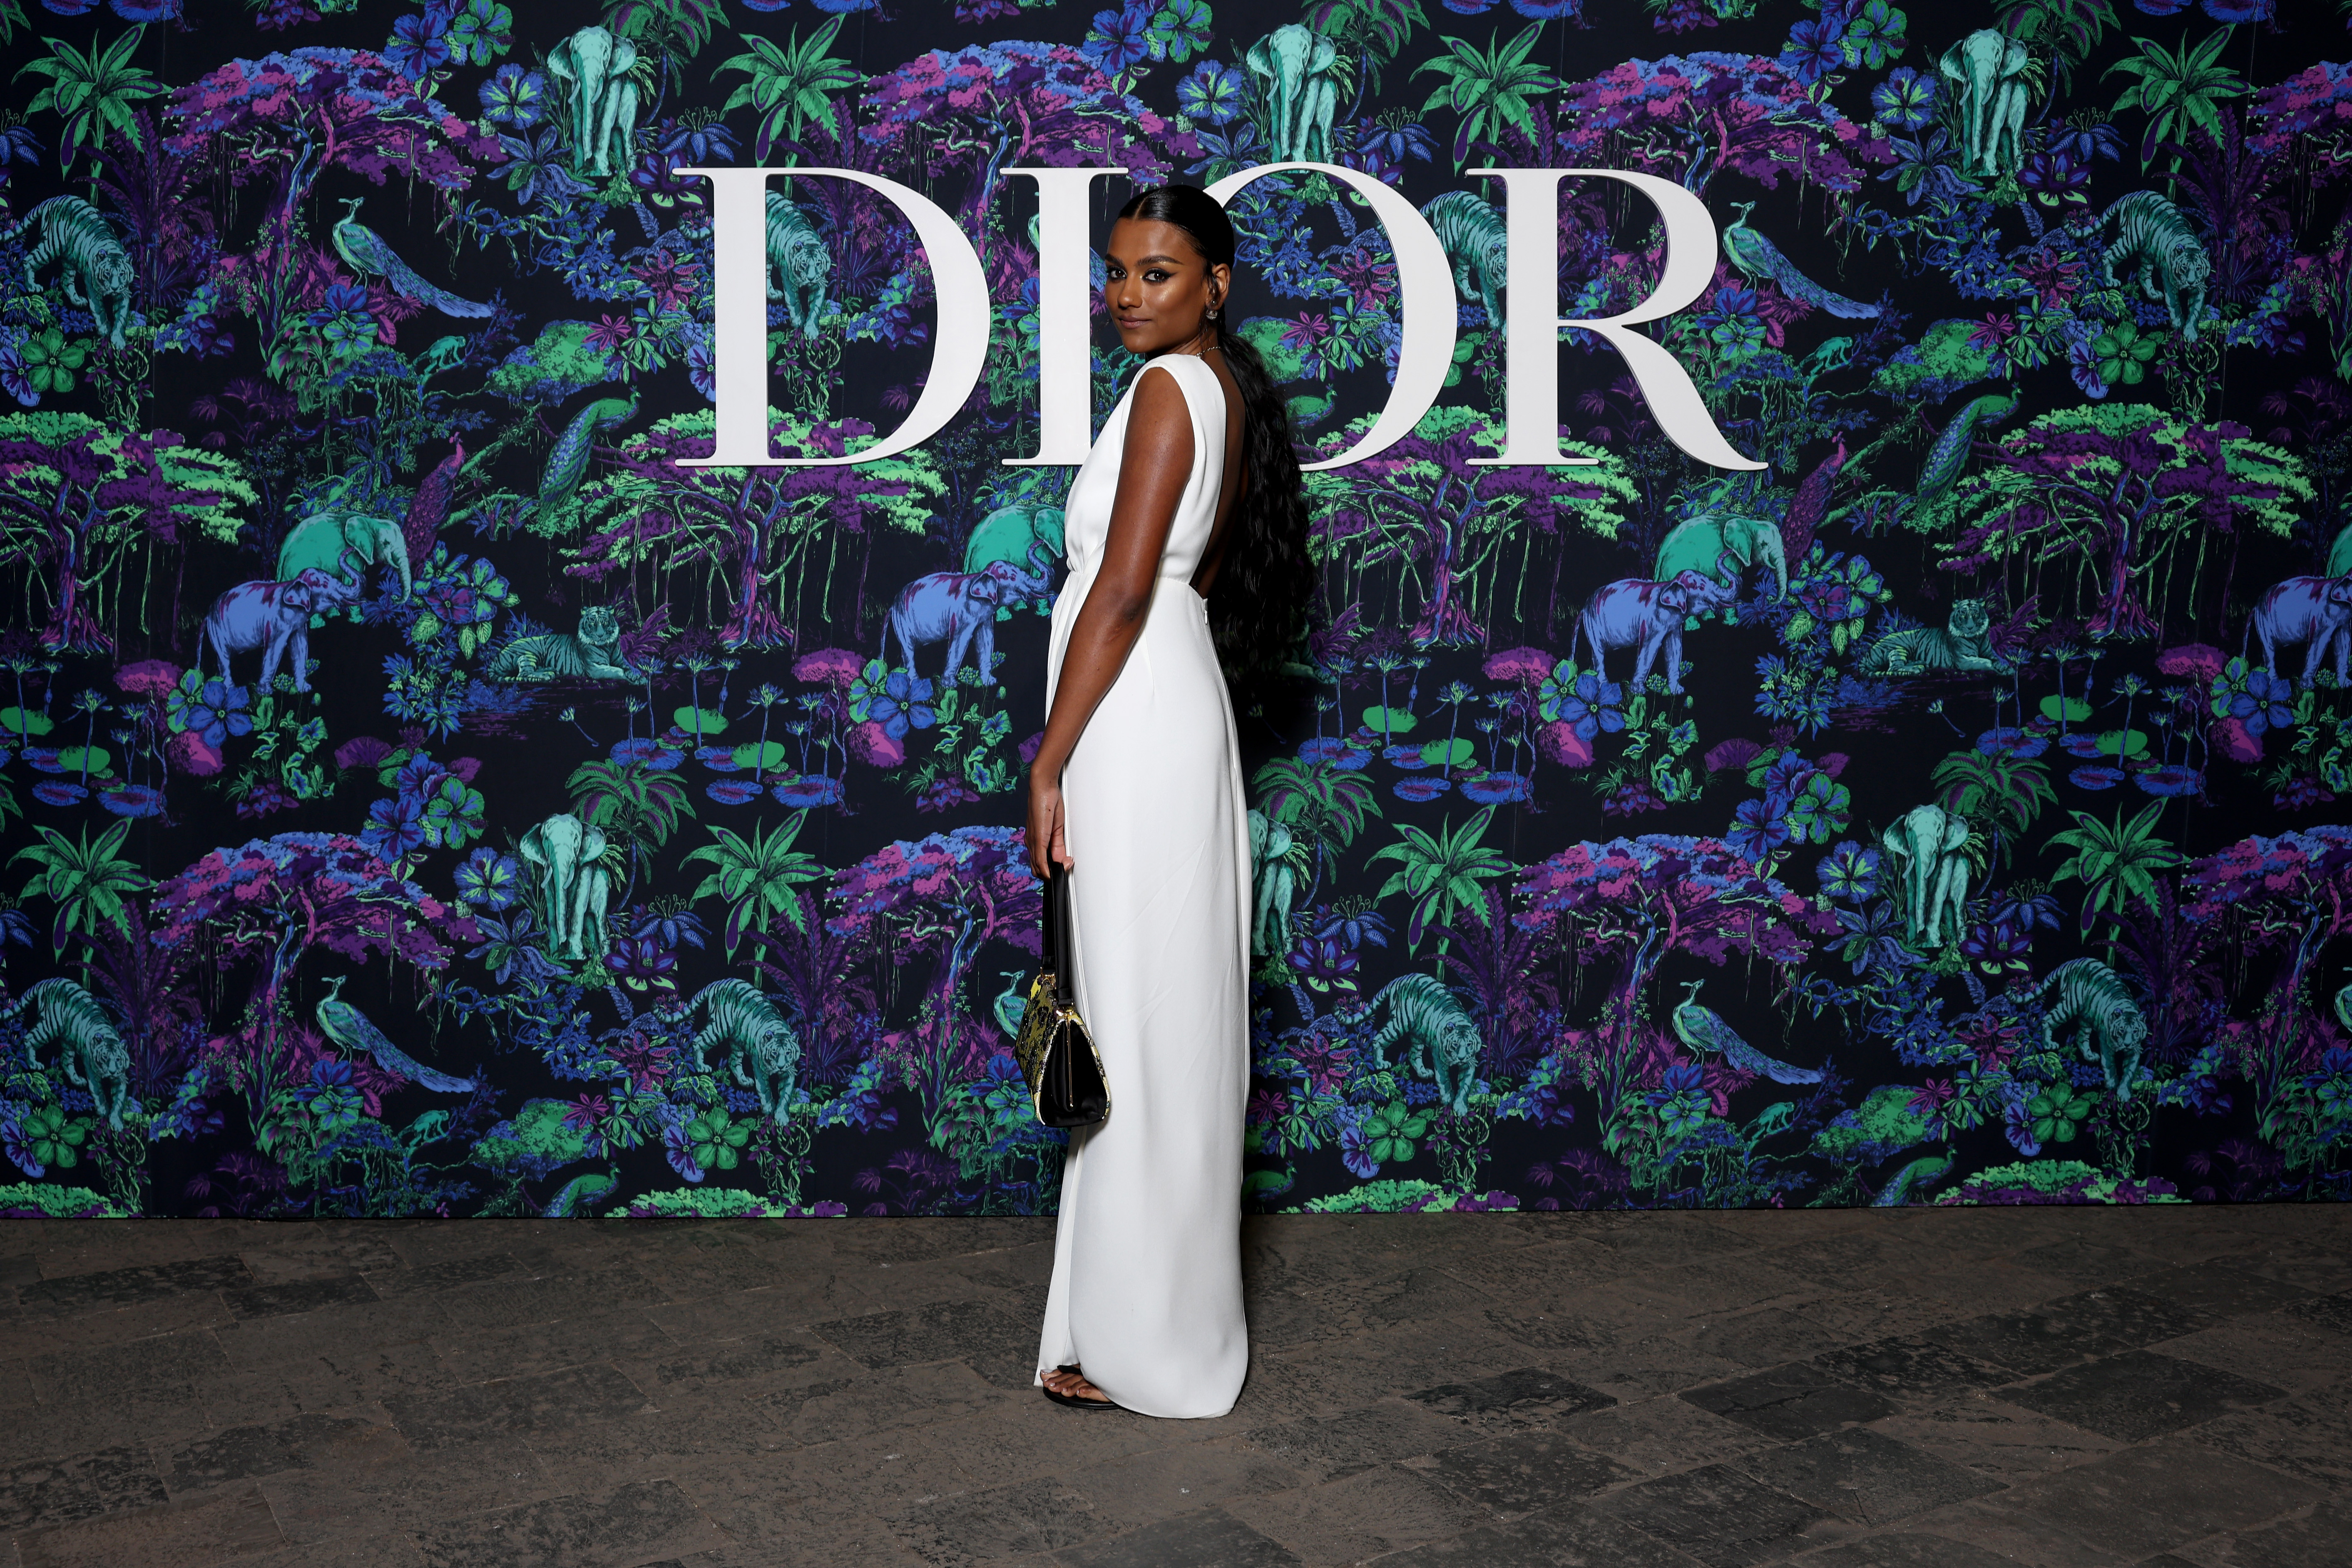 Dior shares details of Princess Iman's 'poetically enchanting